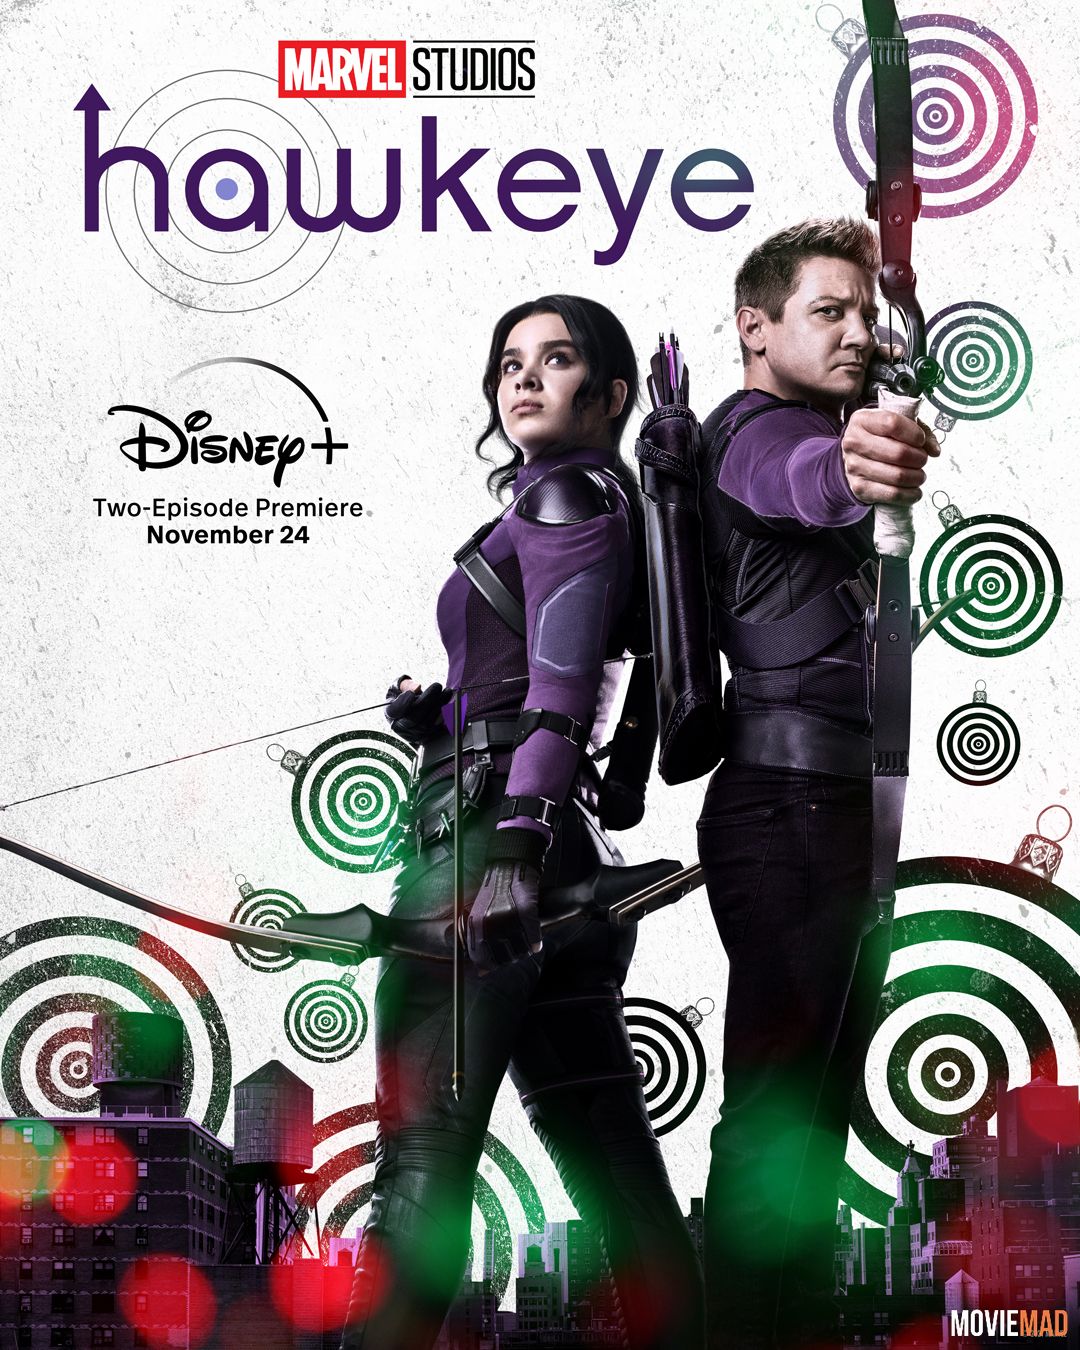 Hawkeye S01E02 (2021) Hindi Dubbed Complete DSPN Series HDRip 720p 480p